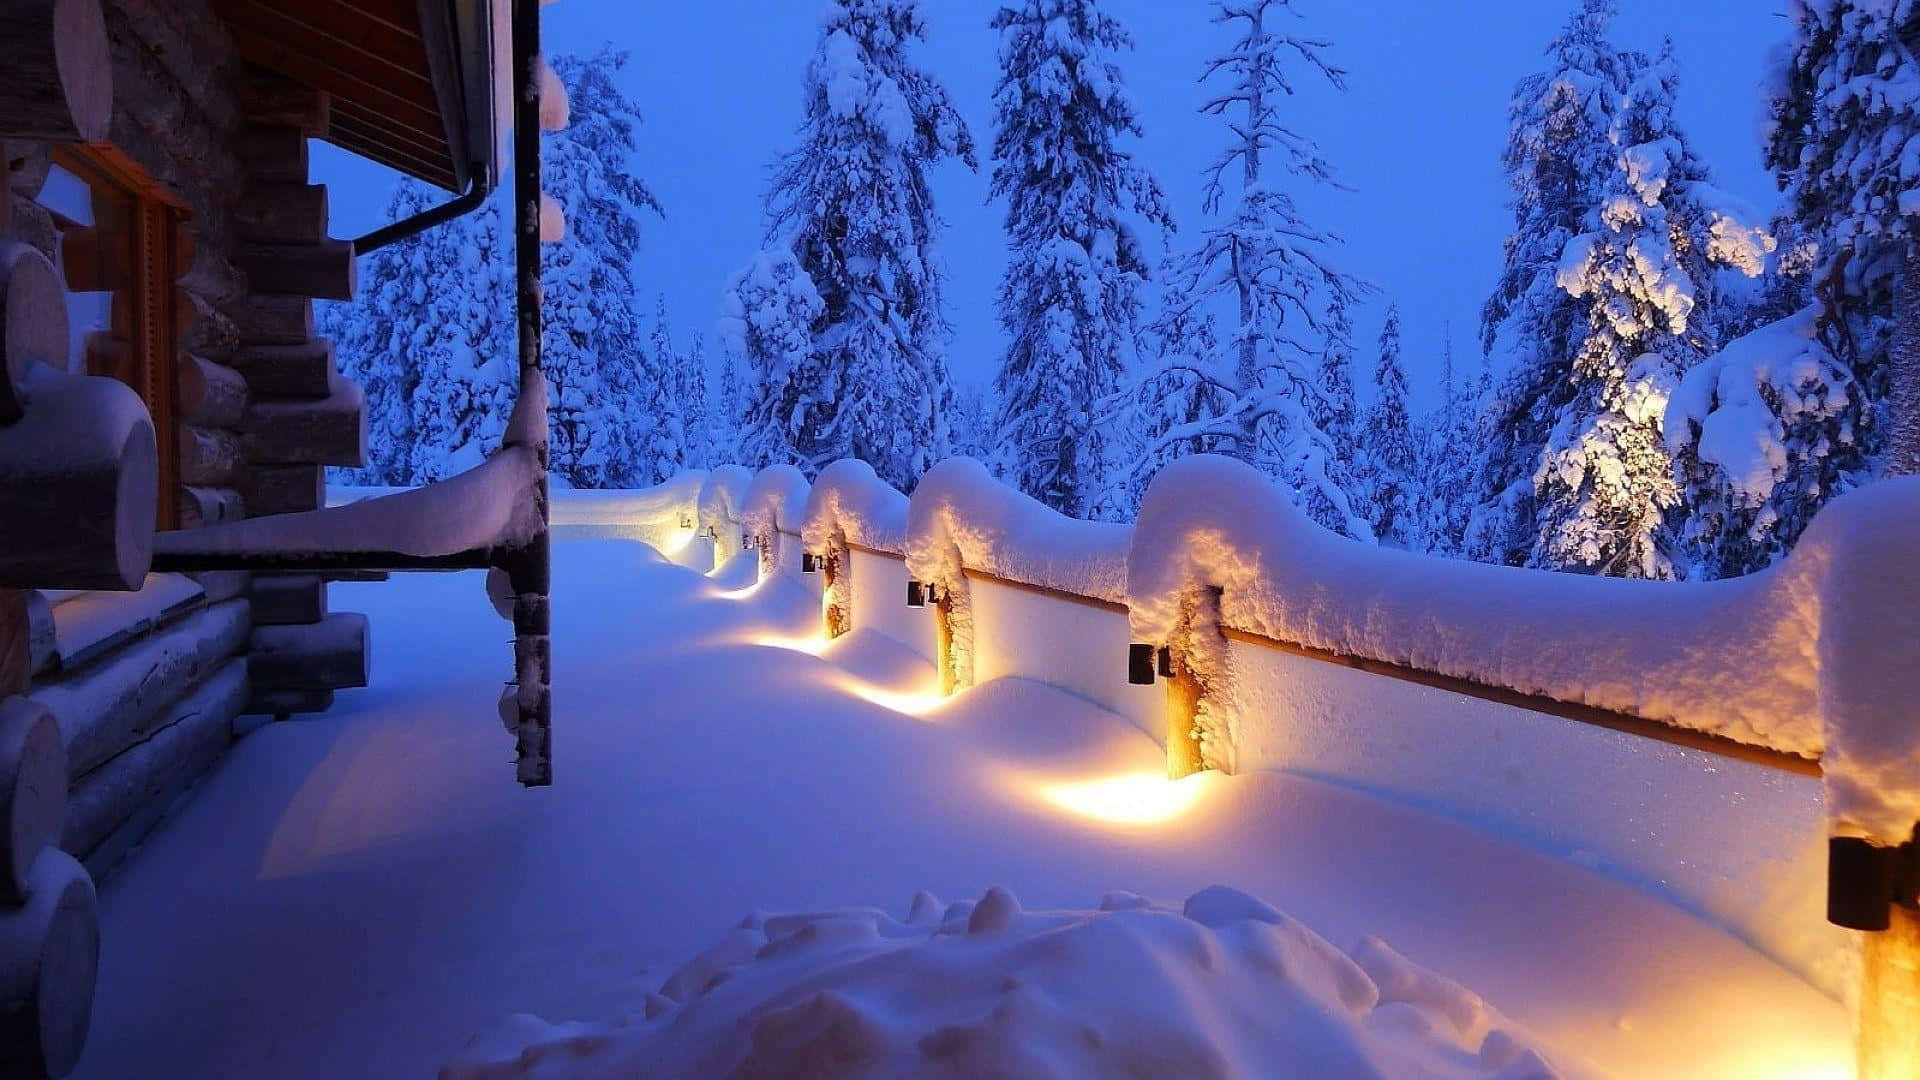 Cozy Winter Scene in High Definition